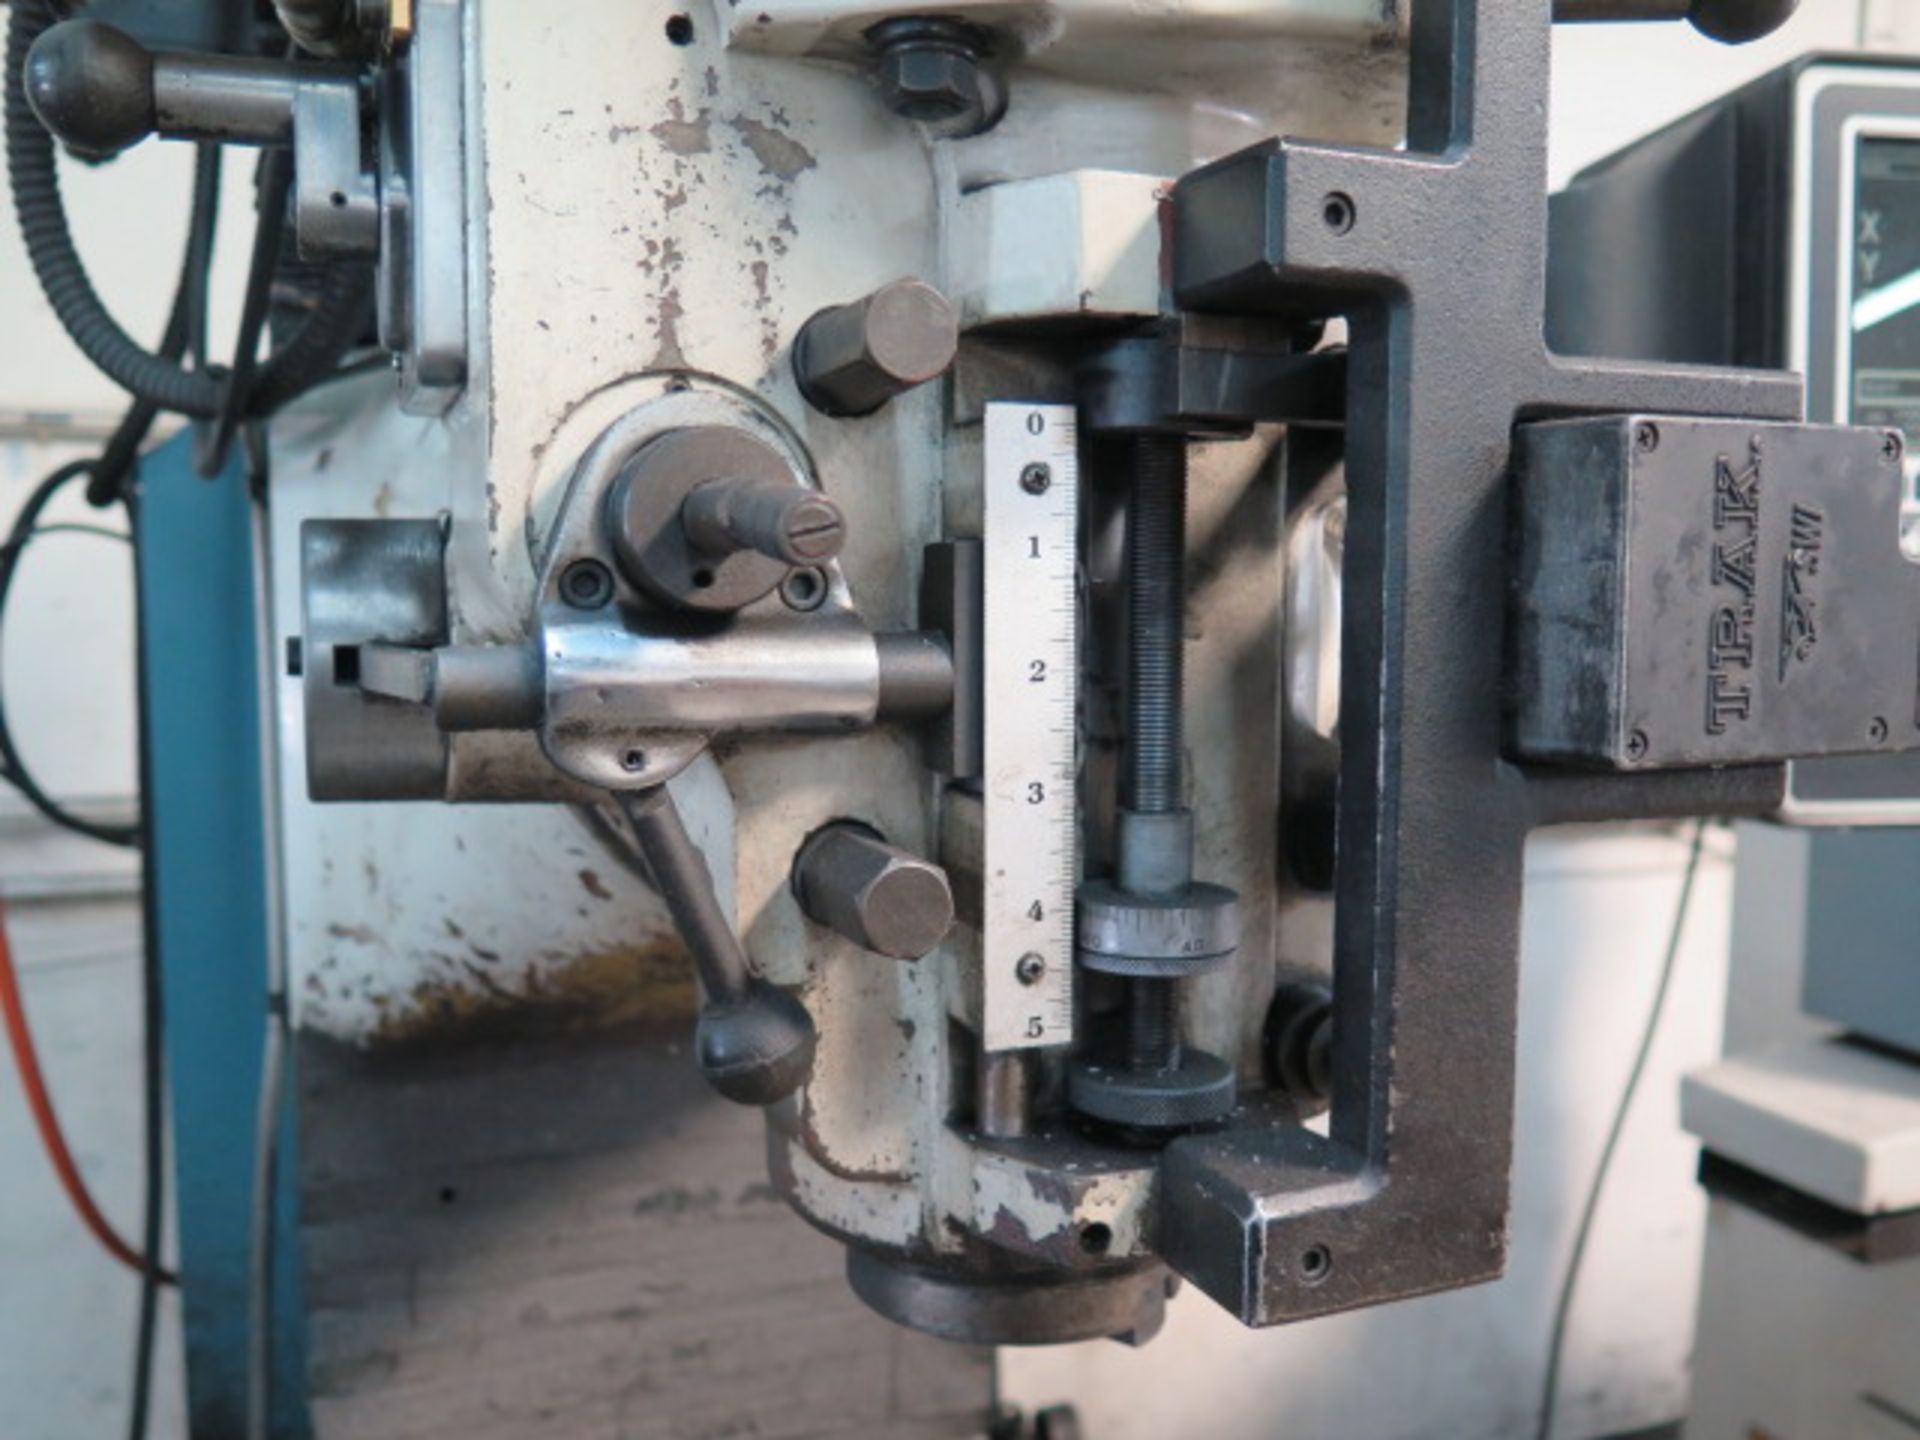 Trak DPM 3-Axis CNC Mill s/n 96-2226 w/ Proto Trak MX3 Controls, 70-4200 RPM, 40-Taper, SOLD AS IS - Image 8 of 16